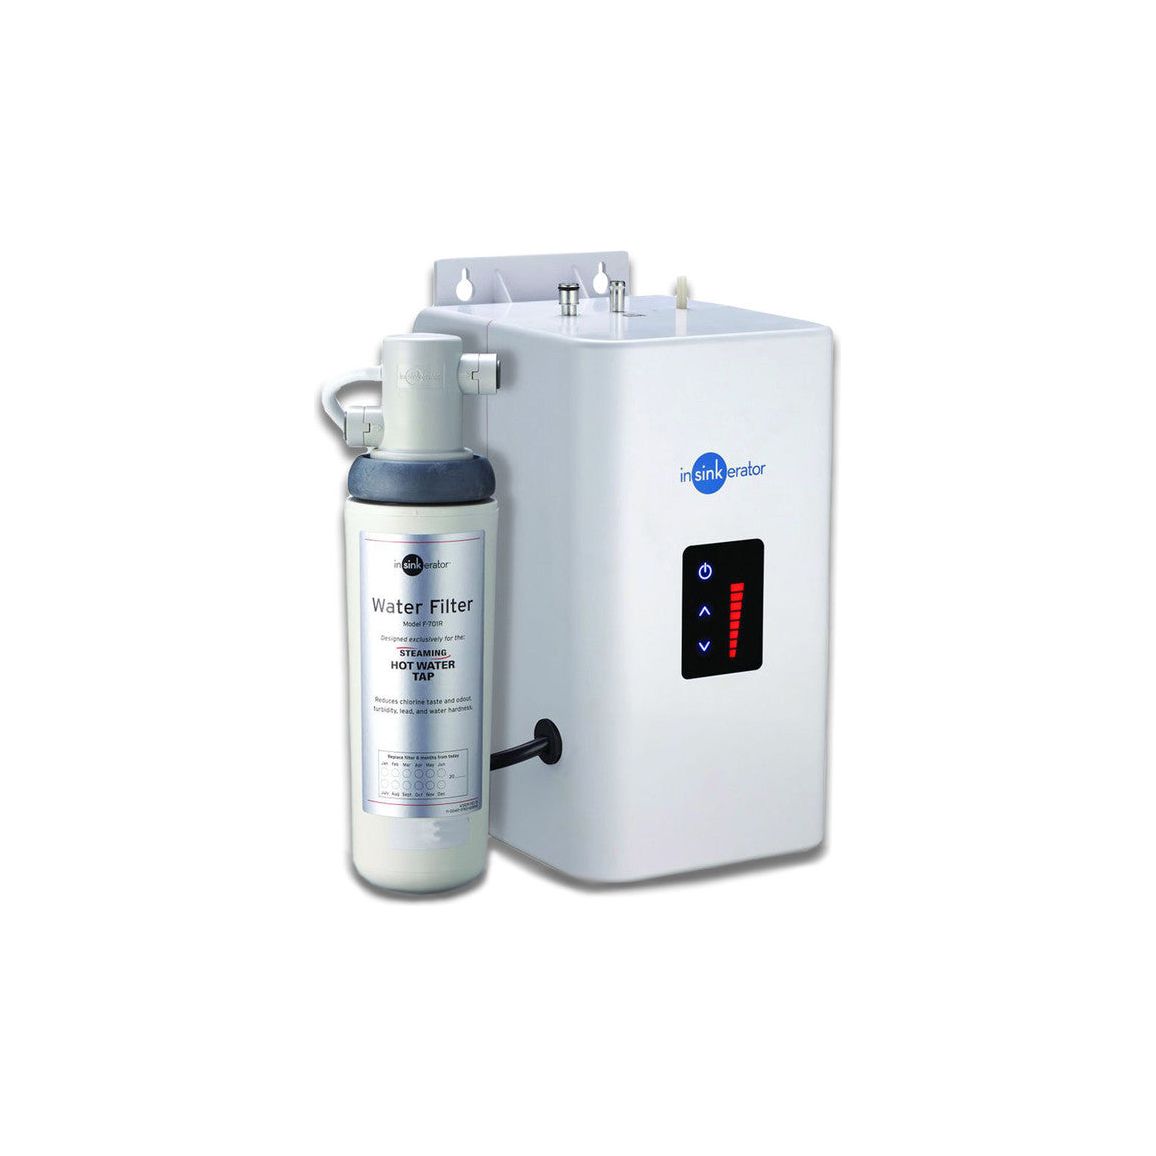 Robinet d'eau chaude et réservoir Neo InSinkErator FH3020 - Nickel poli